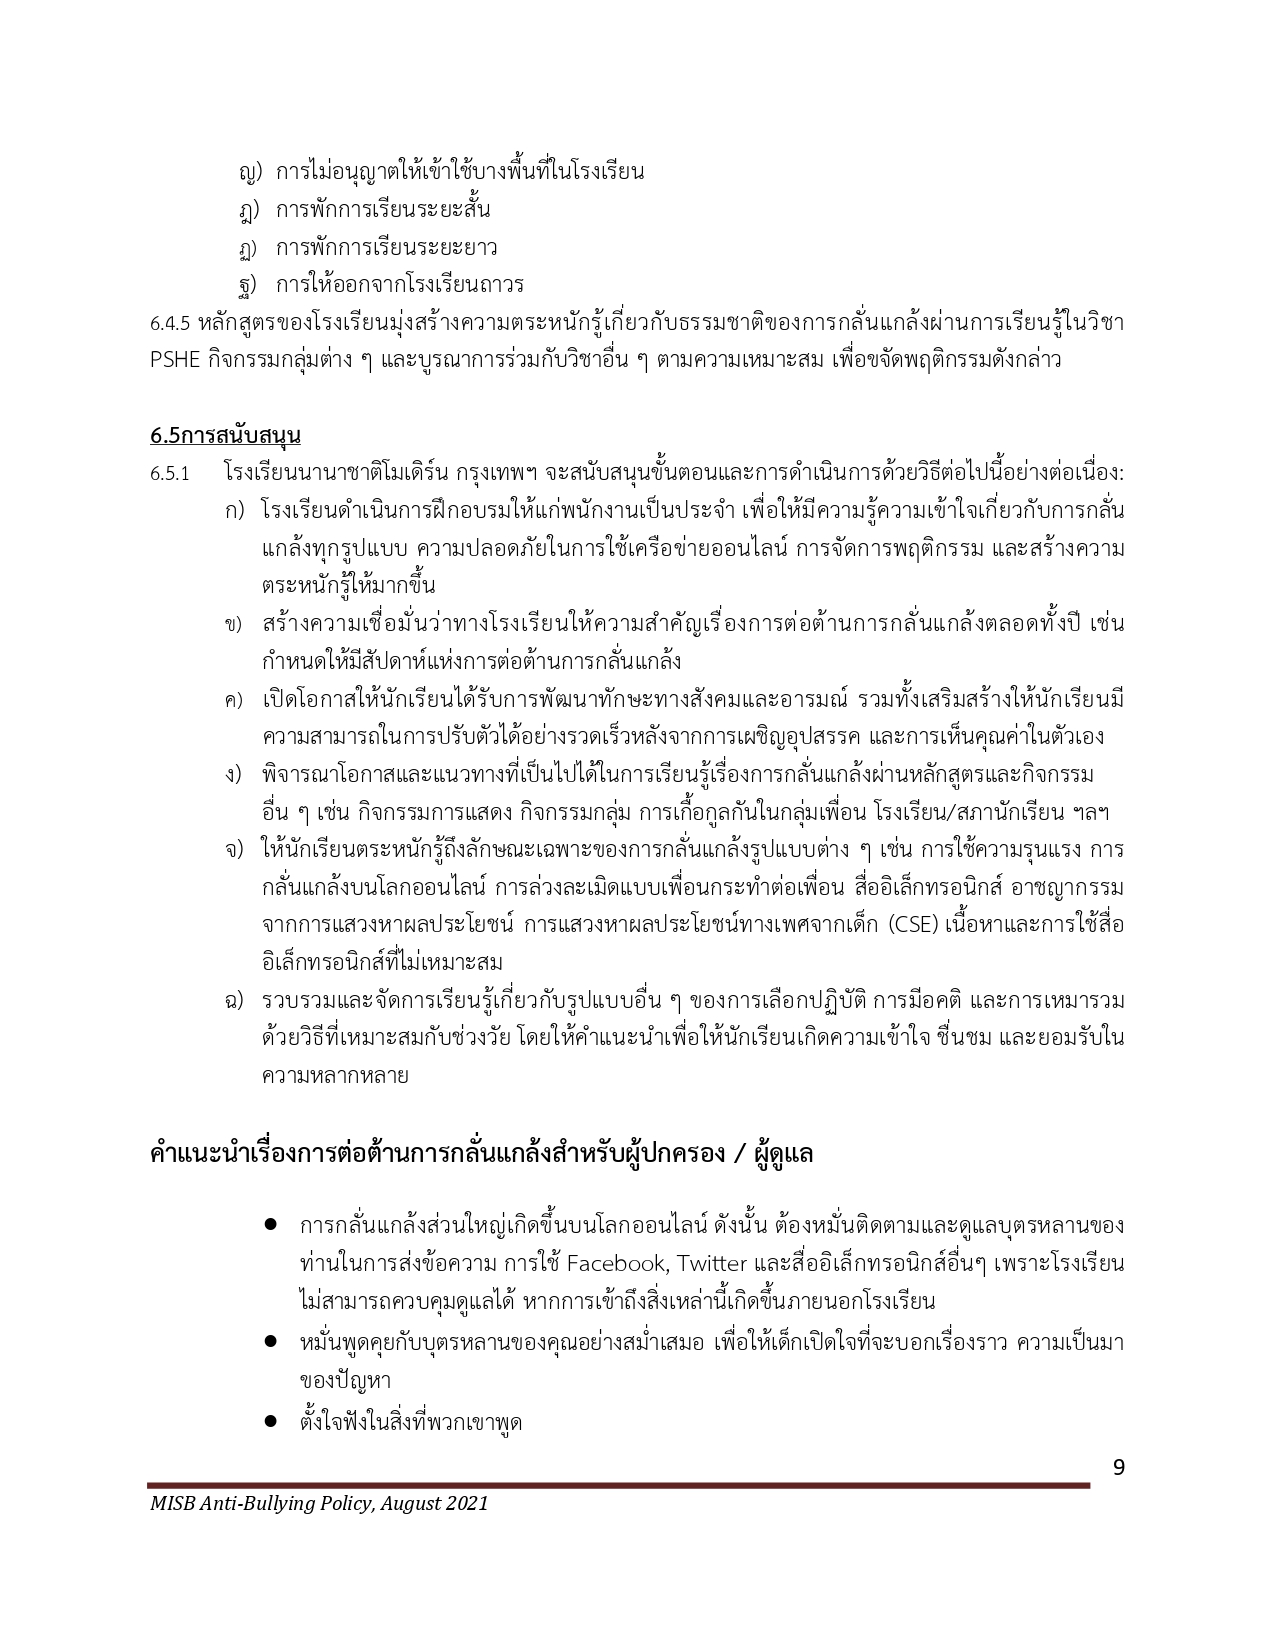 Anti Bullying Policy 2021 2023 Thai Language page 0011